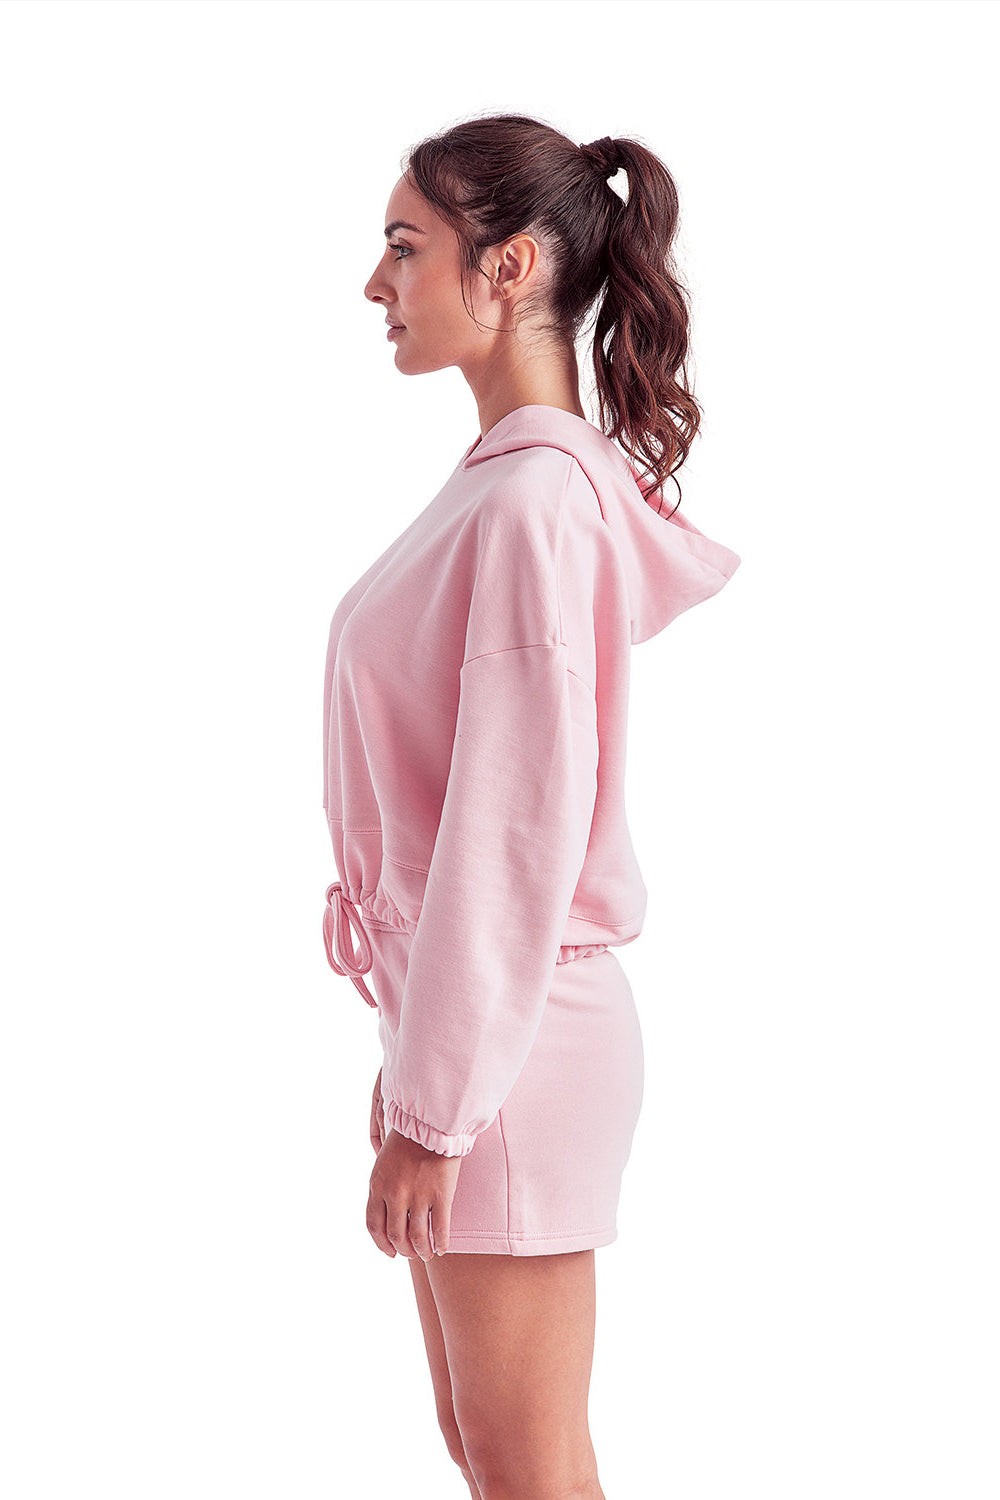 TriDri TD085 Womens Maria Cropped Hooded Sweatshirt Hoodie Light Pink Side